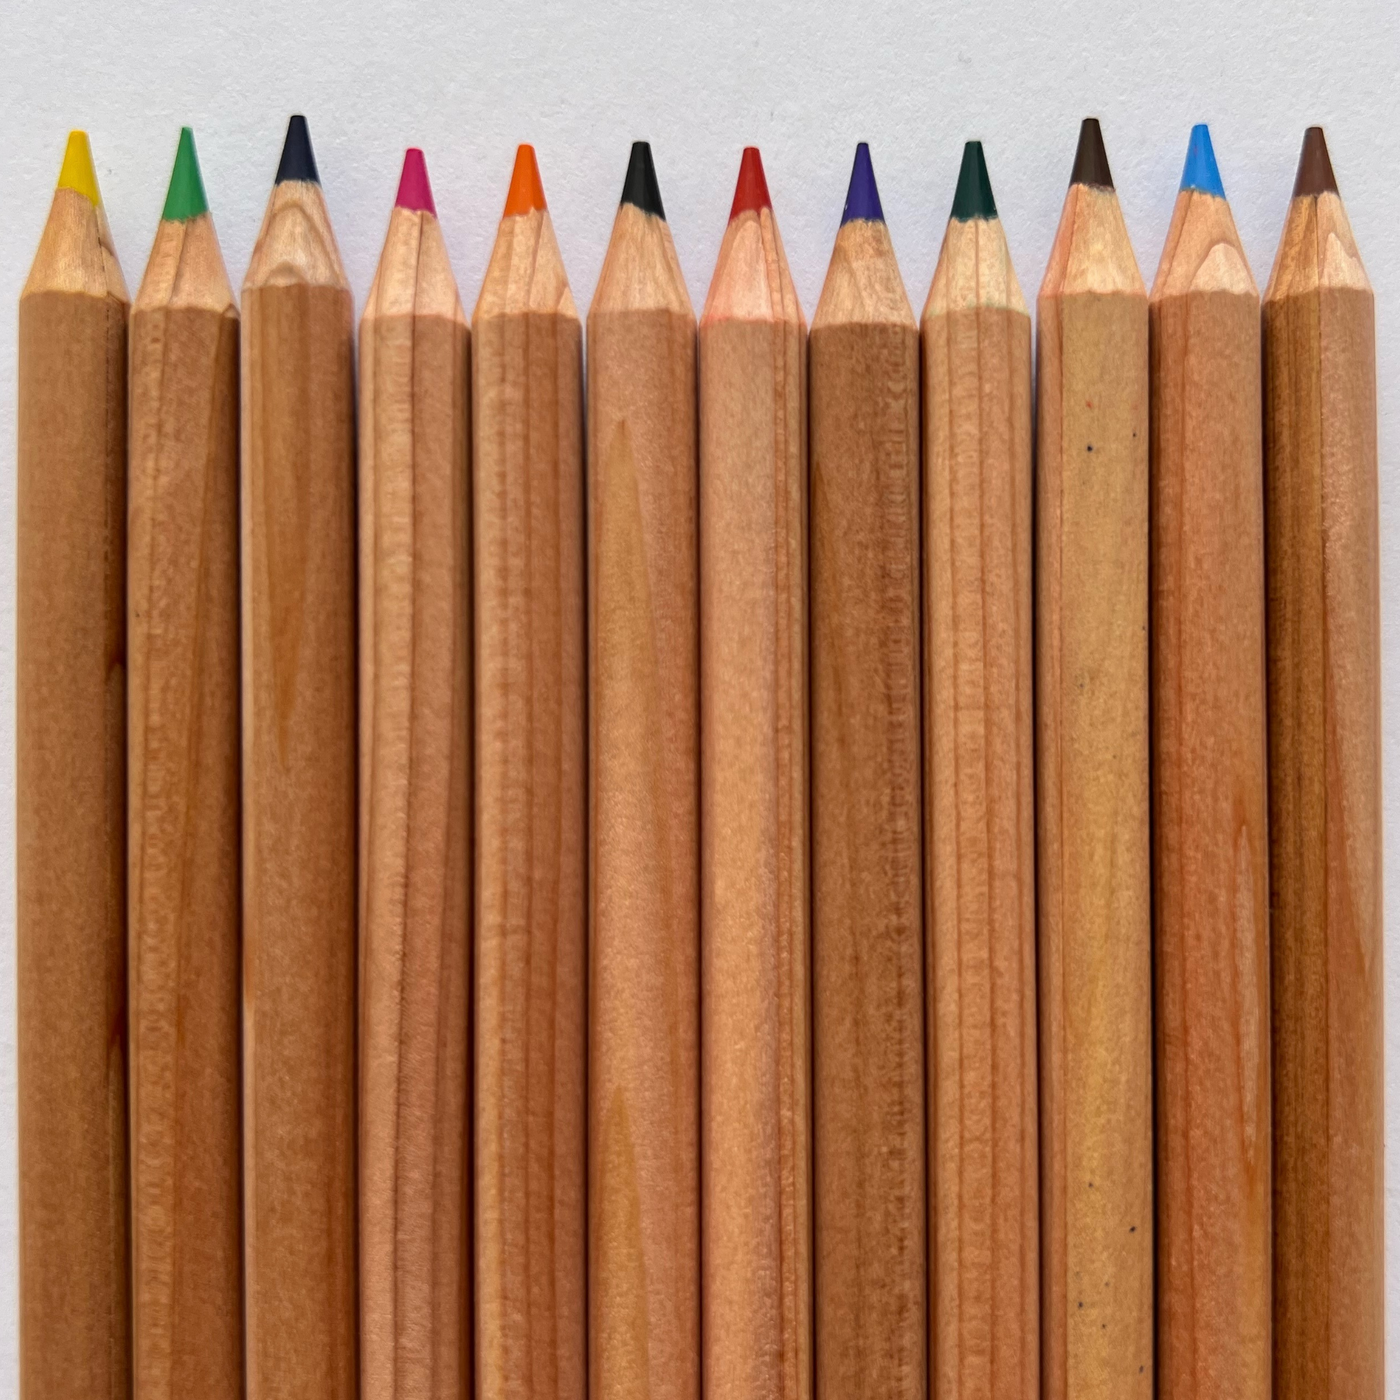 Unlacquered Colored Pencils Case/144 – Wisdom Supply Co.